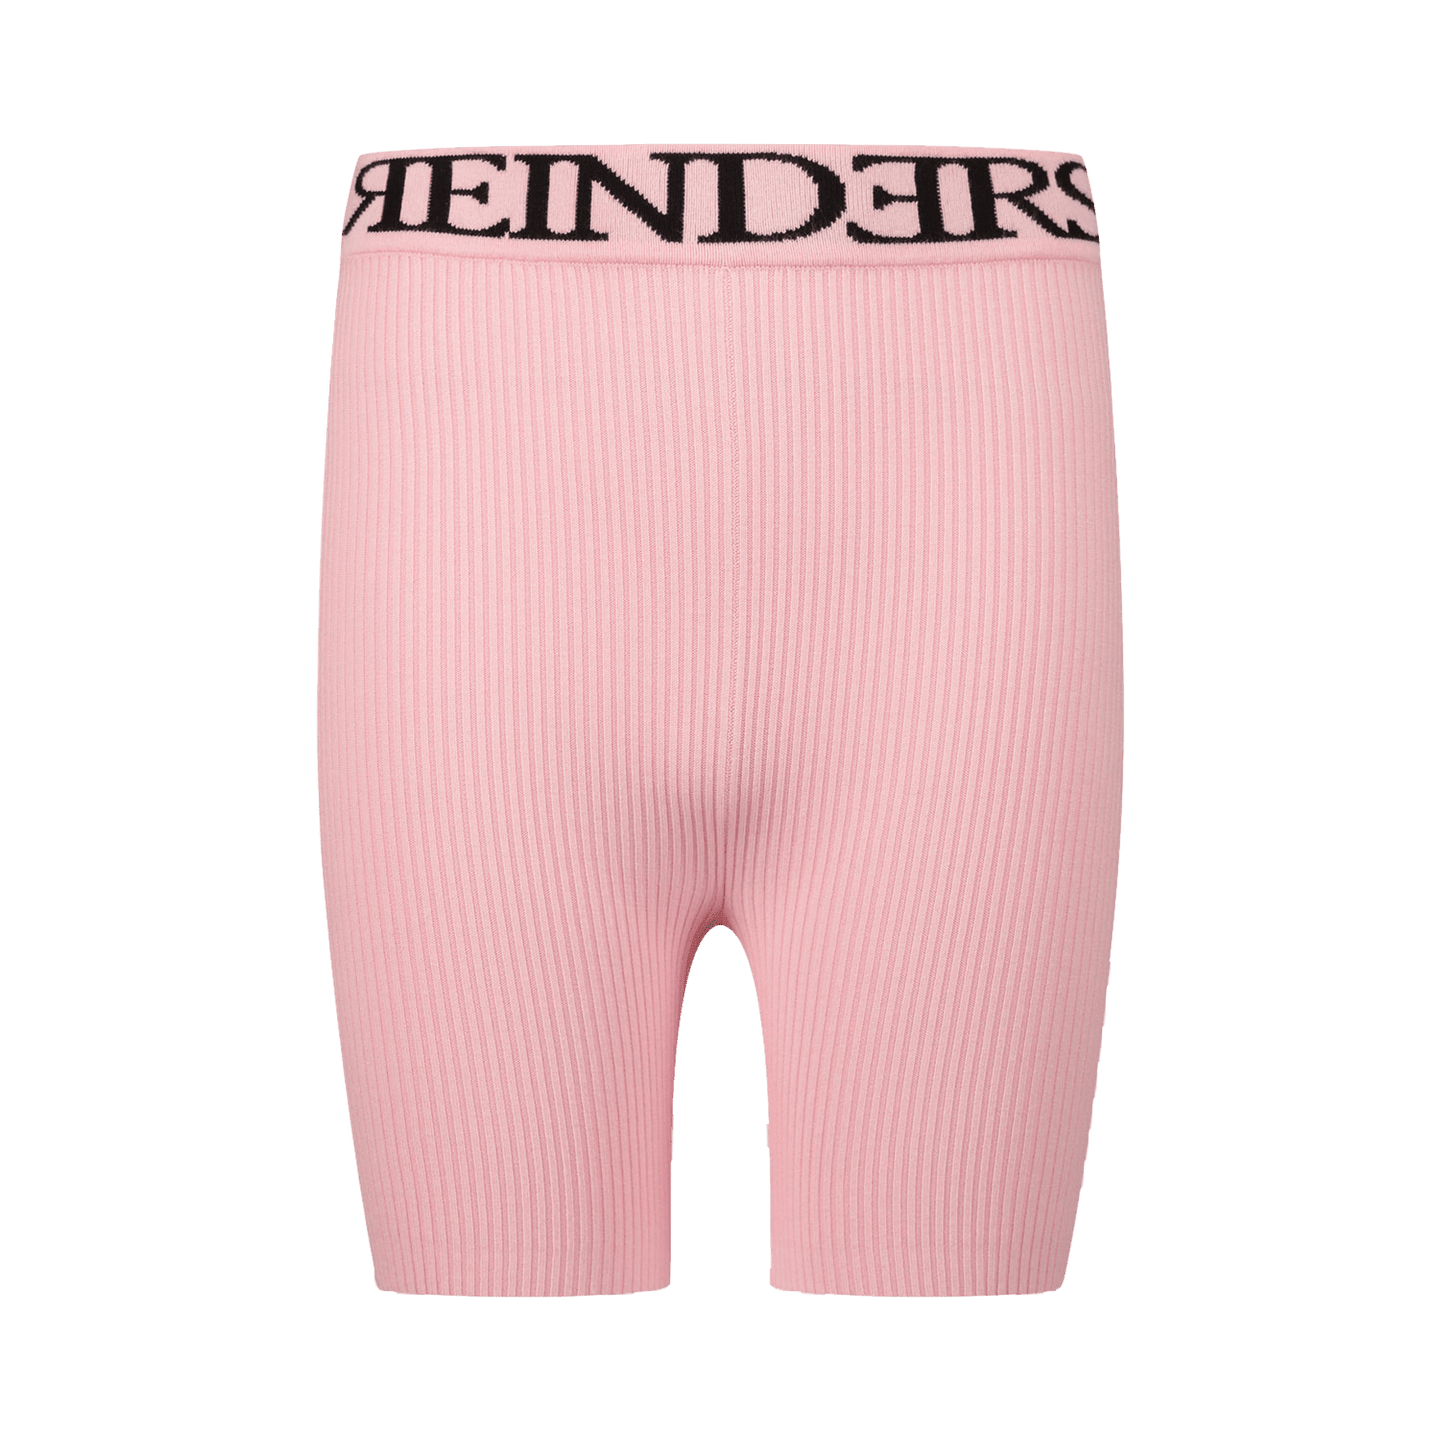 Reinders Kids Girls Legging Light Pink